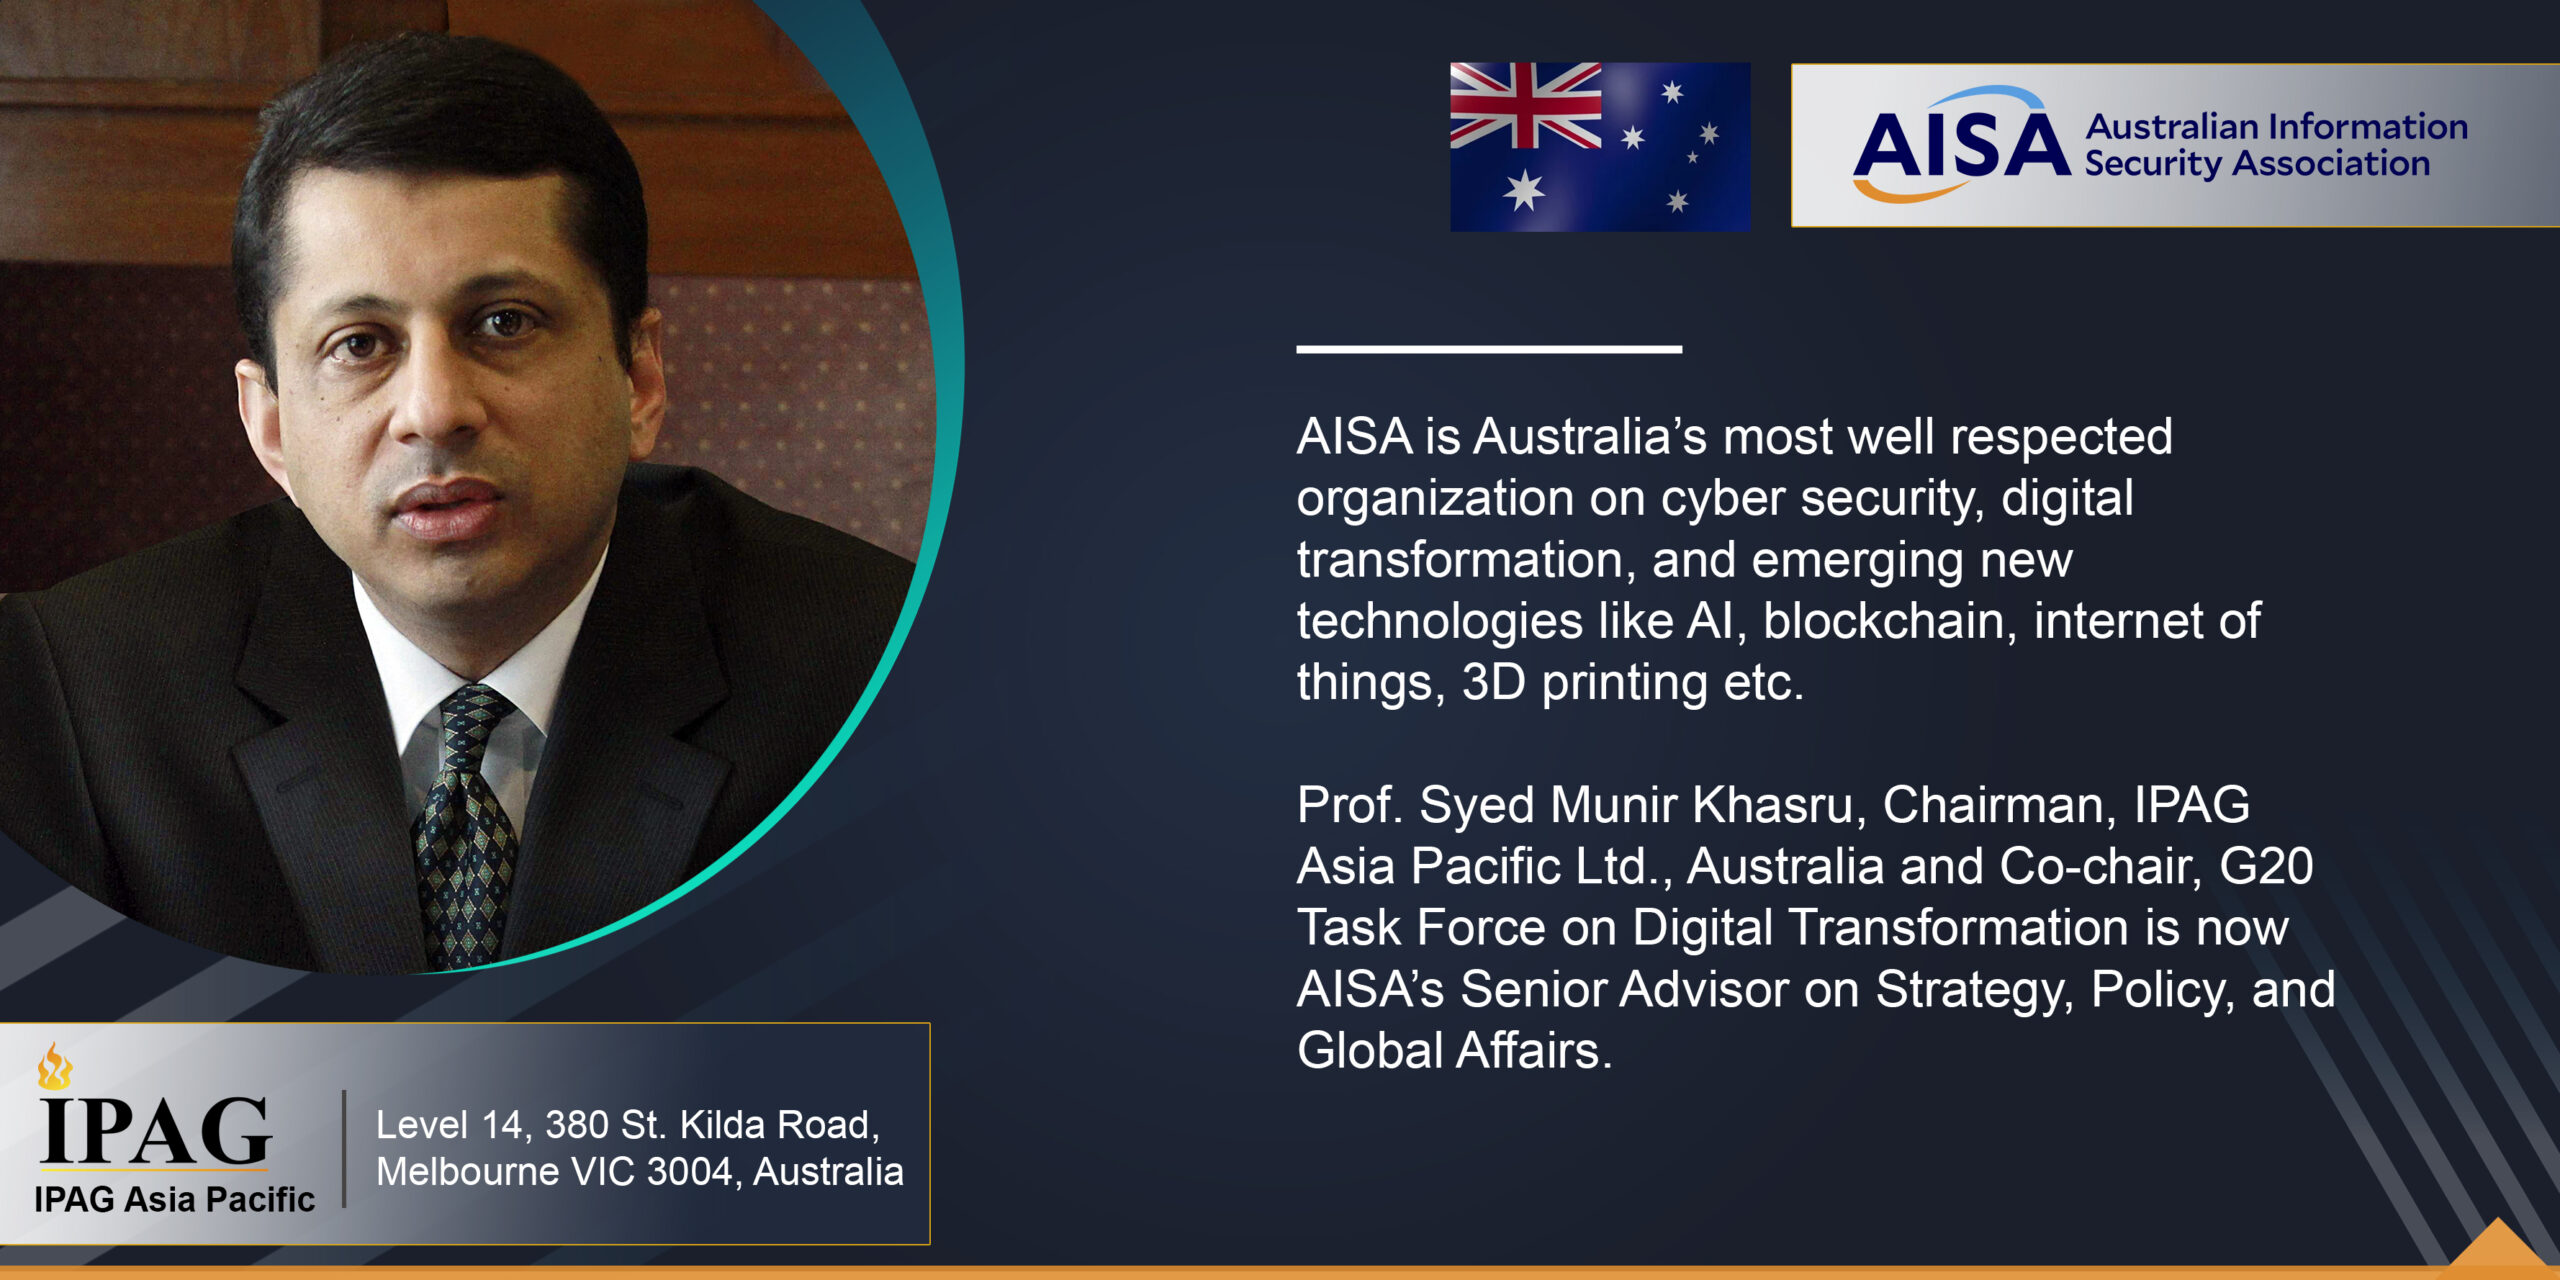 Australia Information Security Association (AISA)